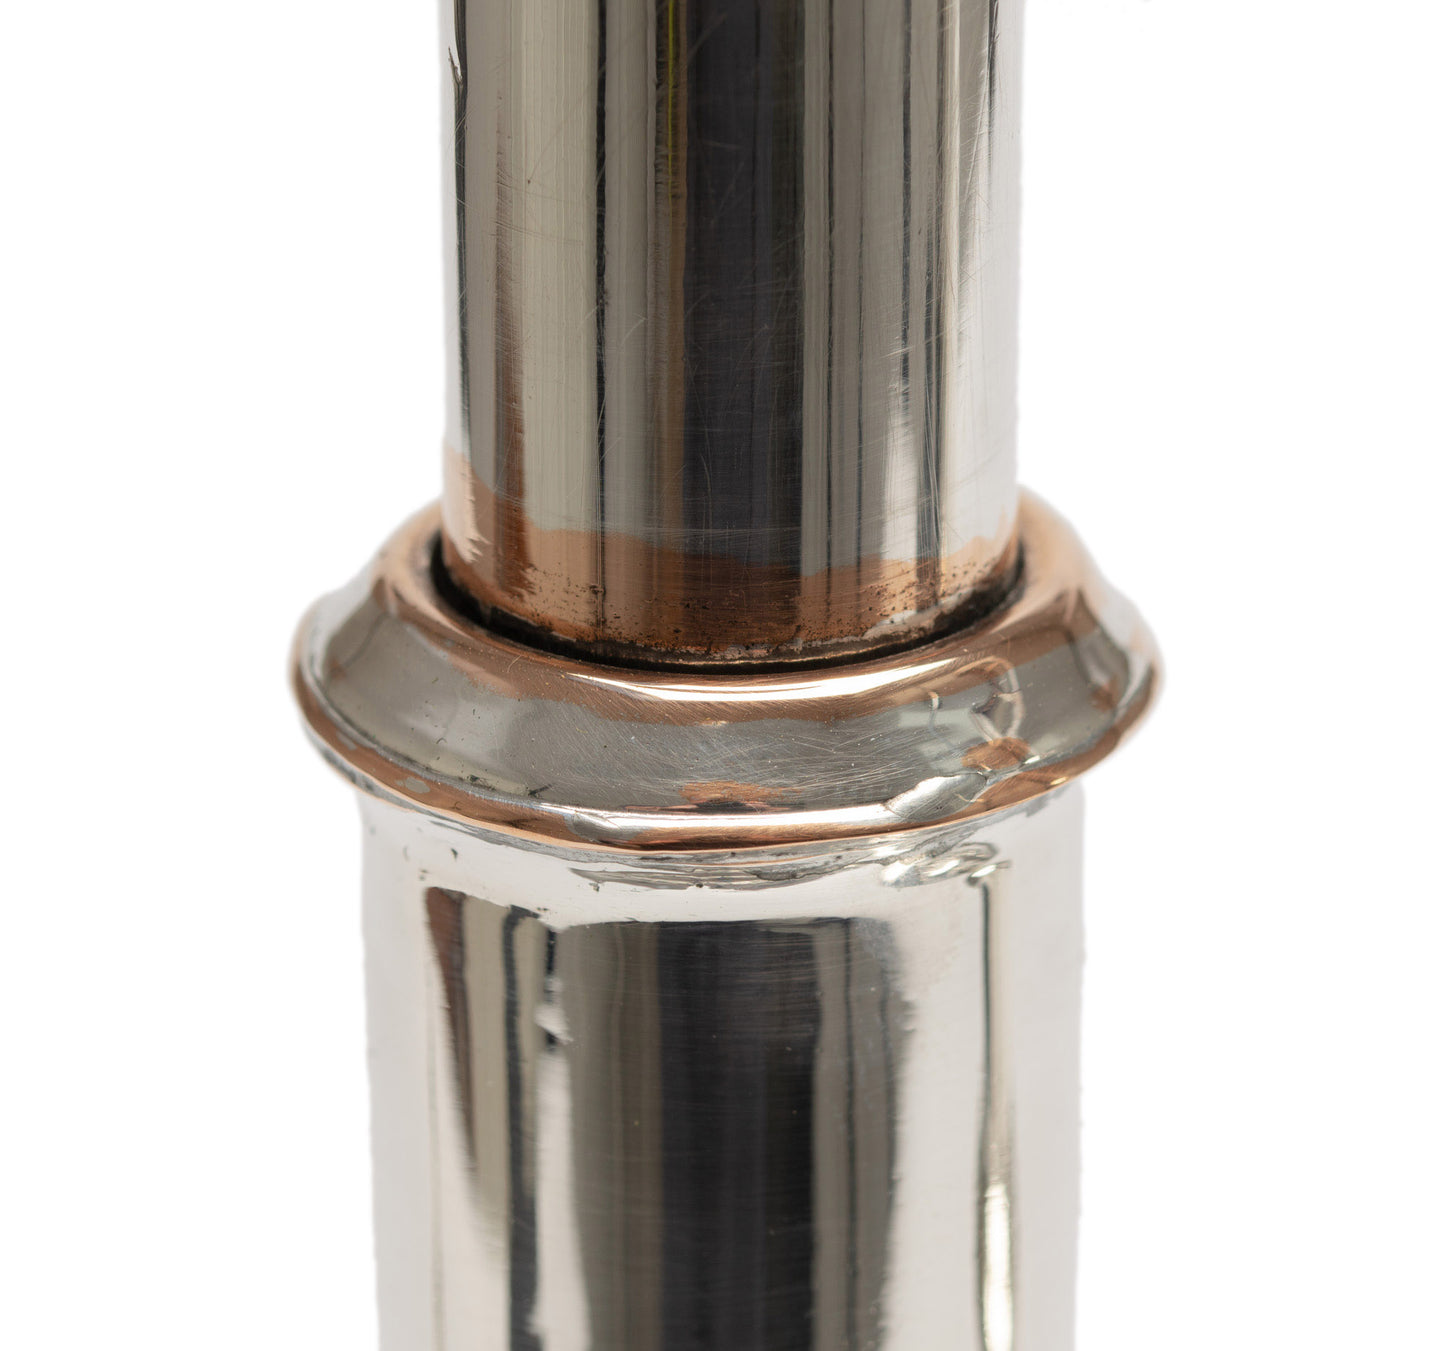 Pair Antique Silver Plated over Copper Telescopic Candlesticks - Victorian Era (Code 2563)